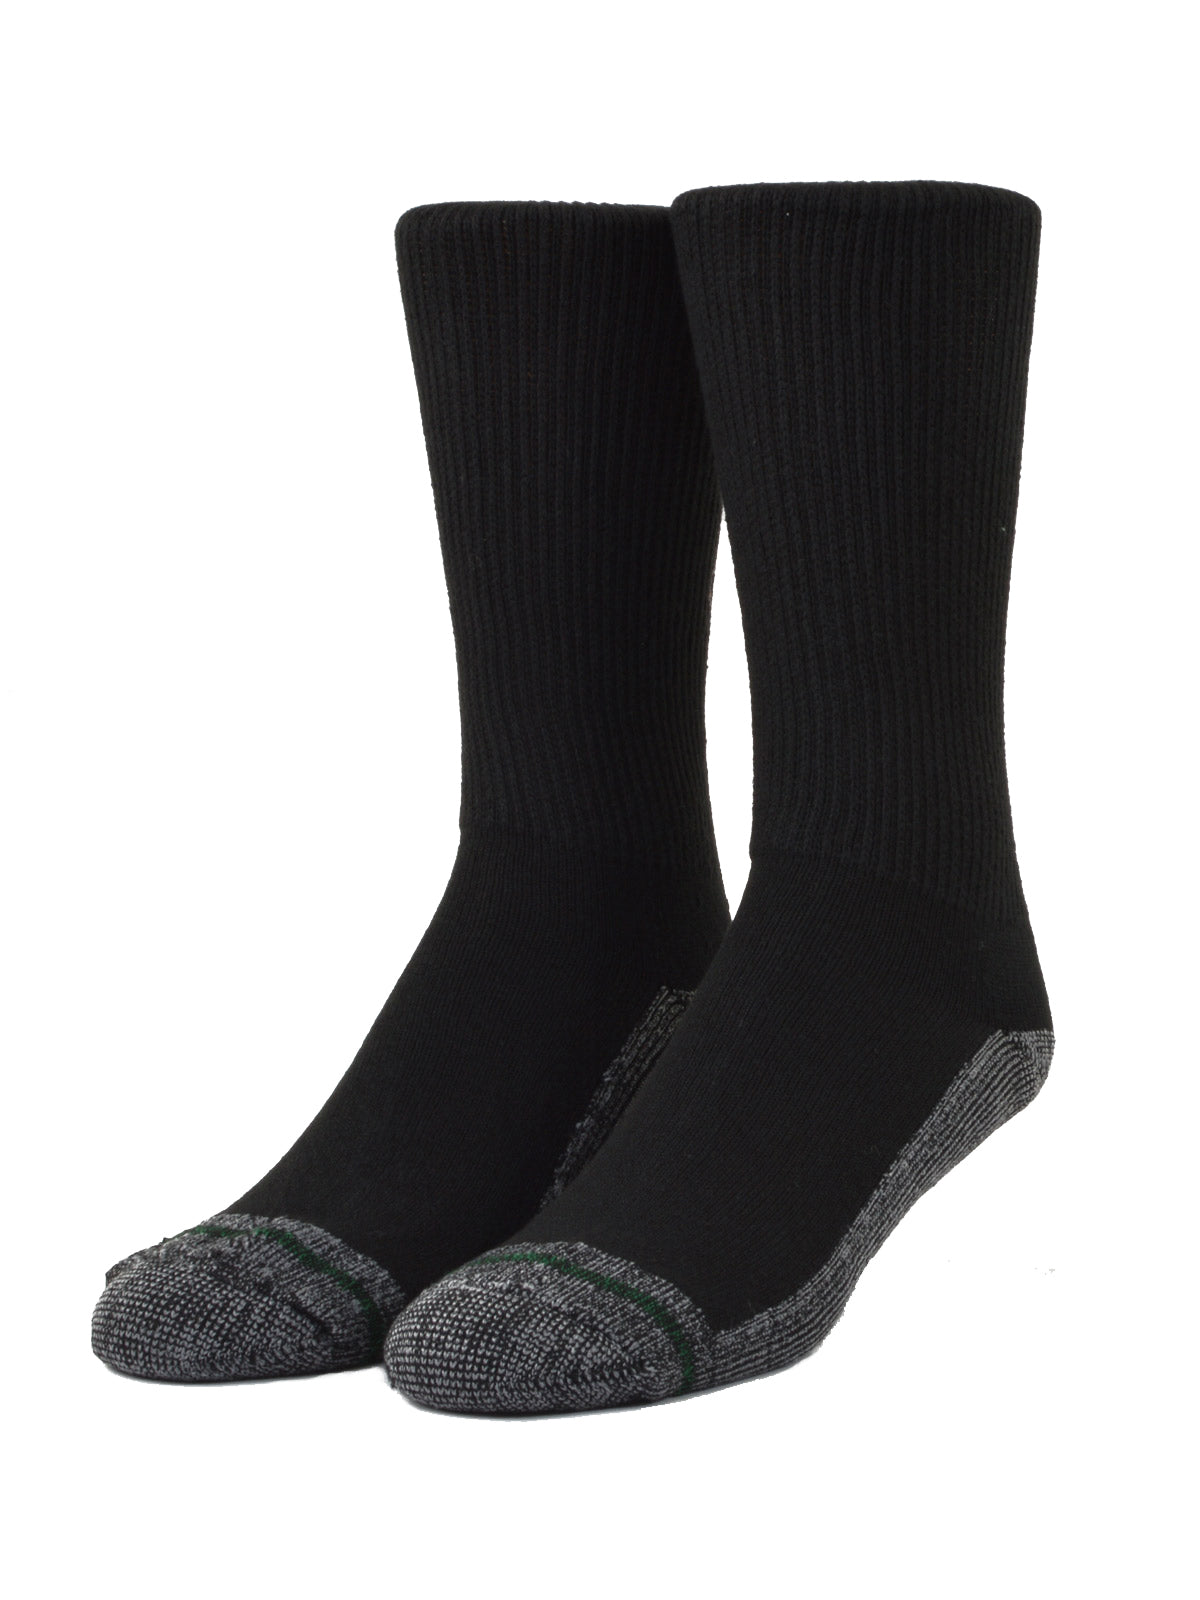 Loose Fit Stays Up Crew Athletic Socks in Black - Medium (Size 8.5 - 11.5) - 781